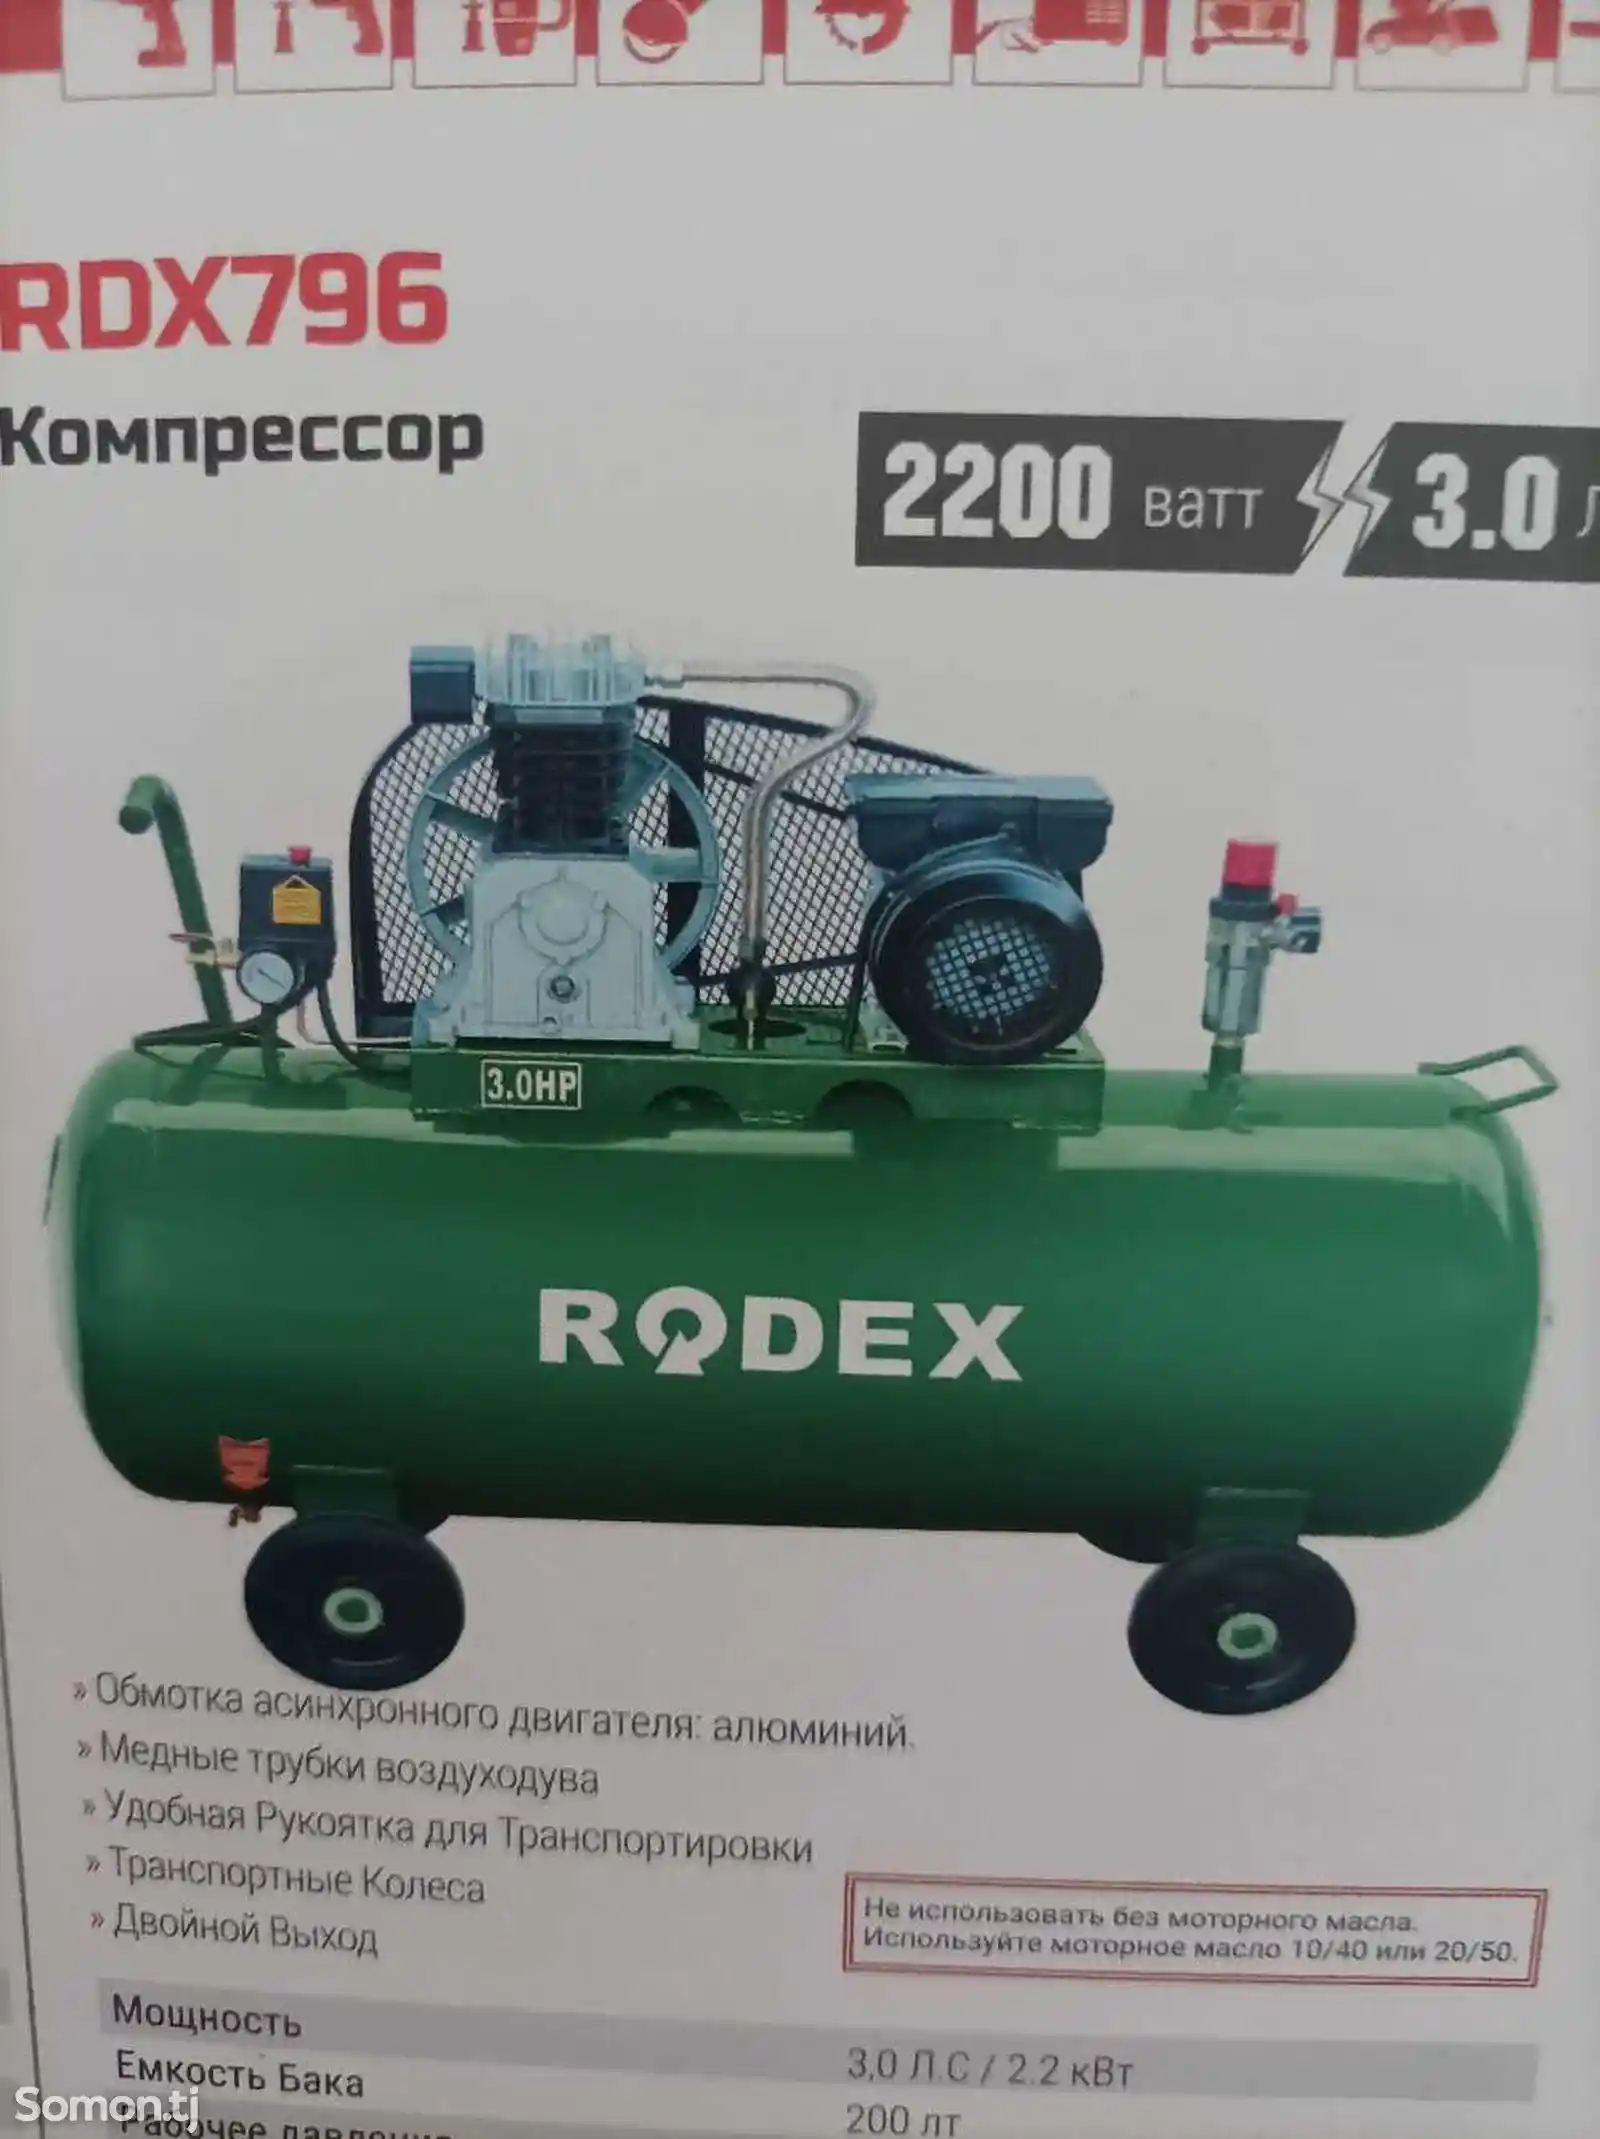 Компрессор RDX796